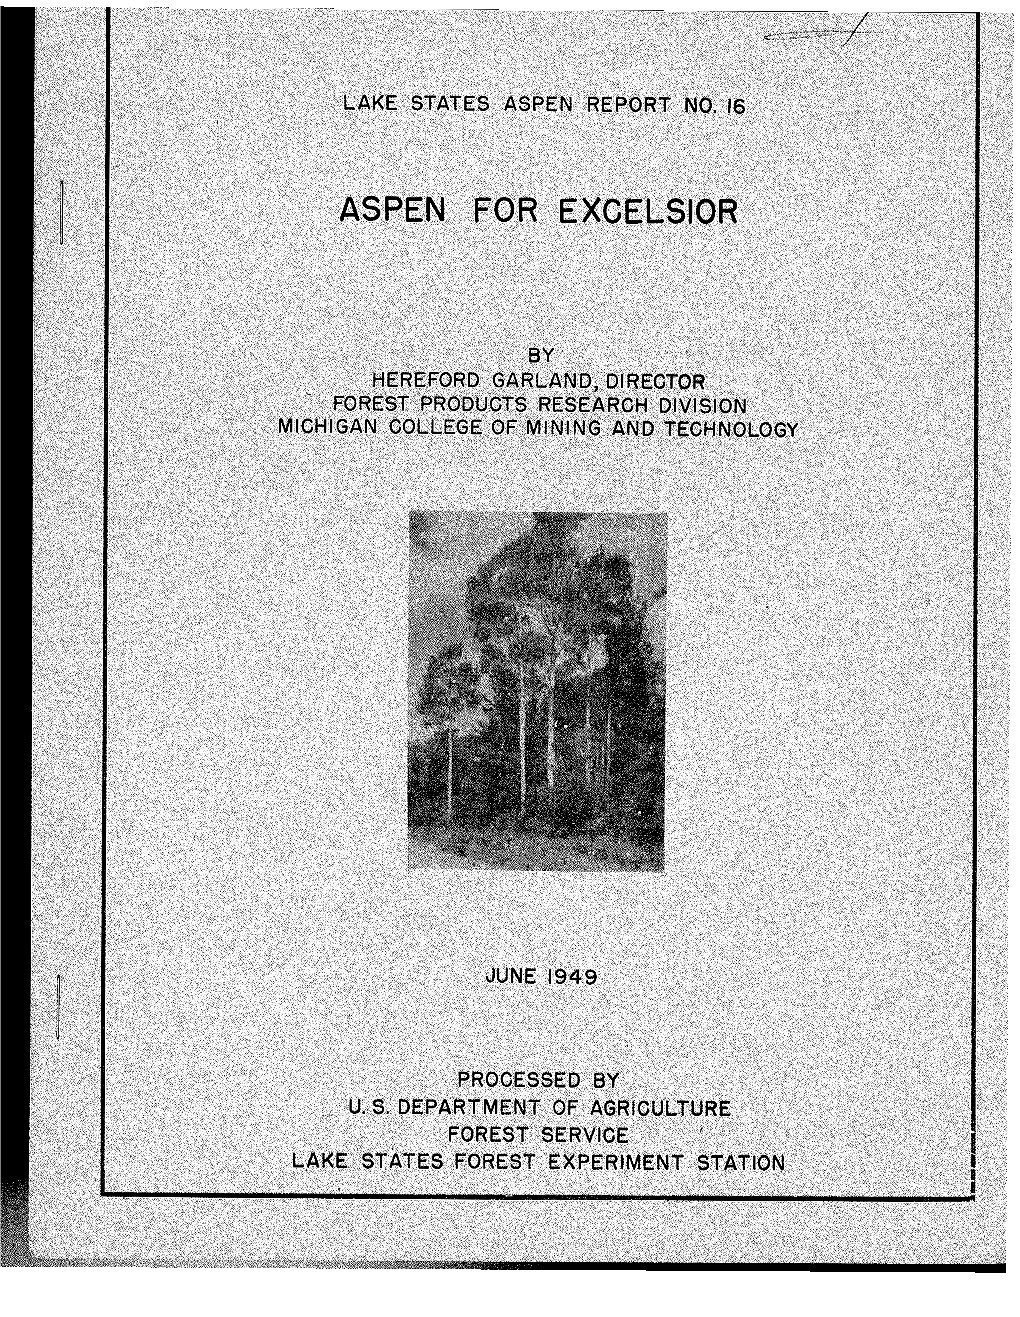 Aspen for Excelsior